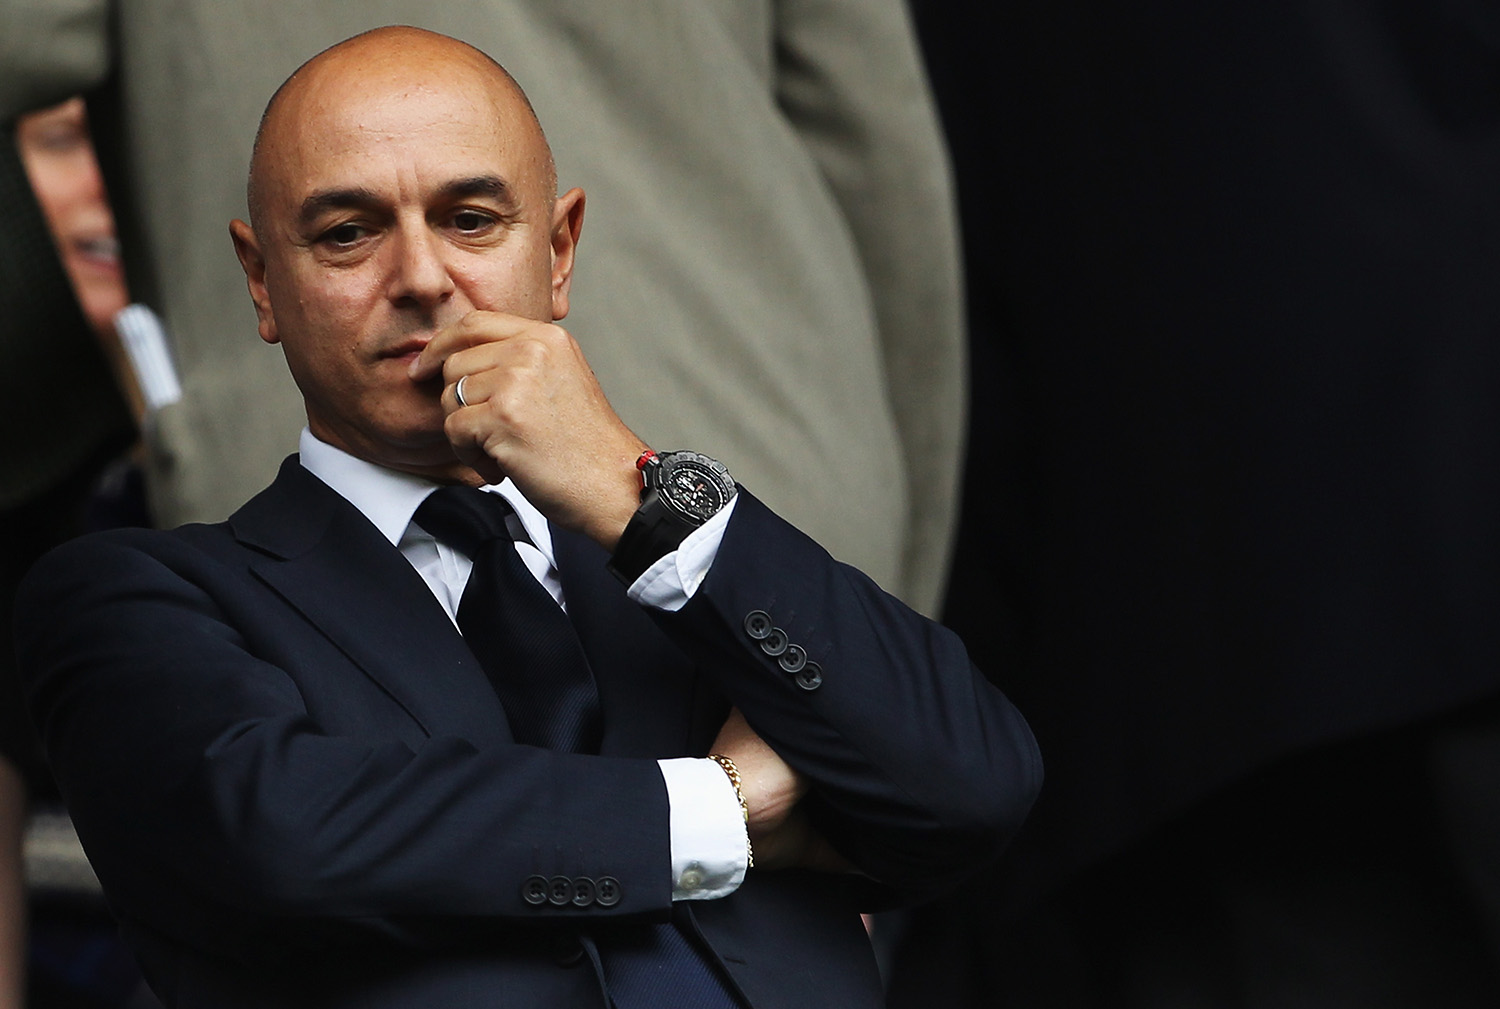 Tottenham Hotspur and Kumho Tyre extend partnership deal amidst financial concerns.